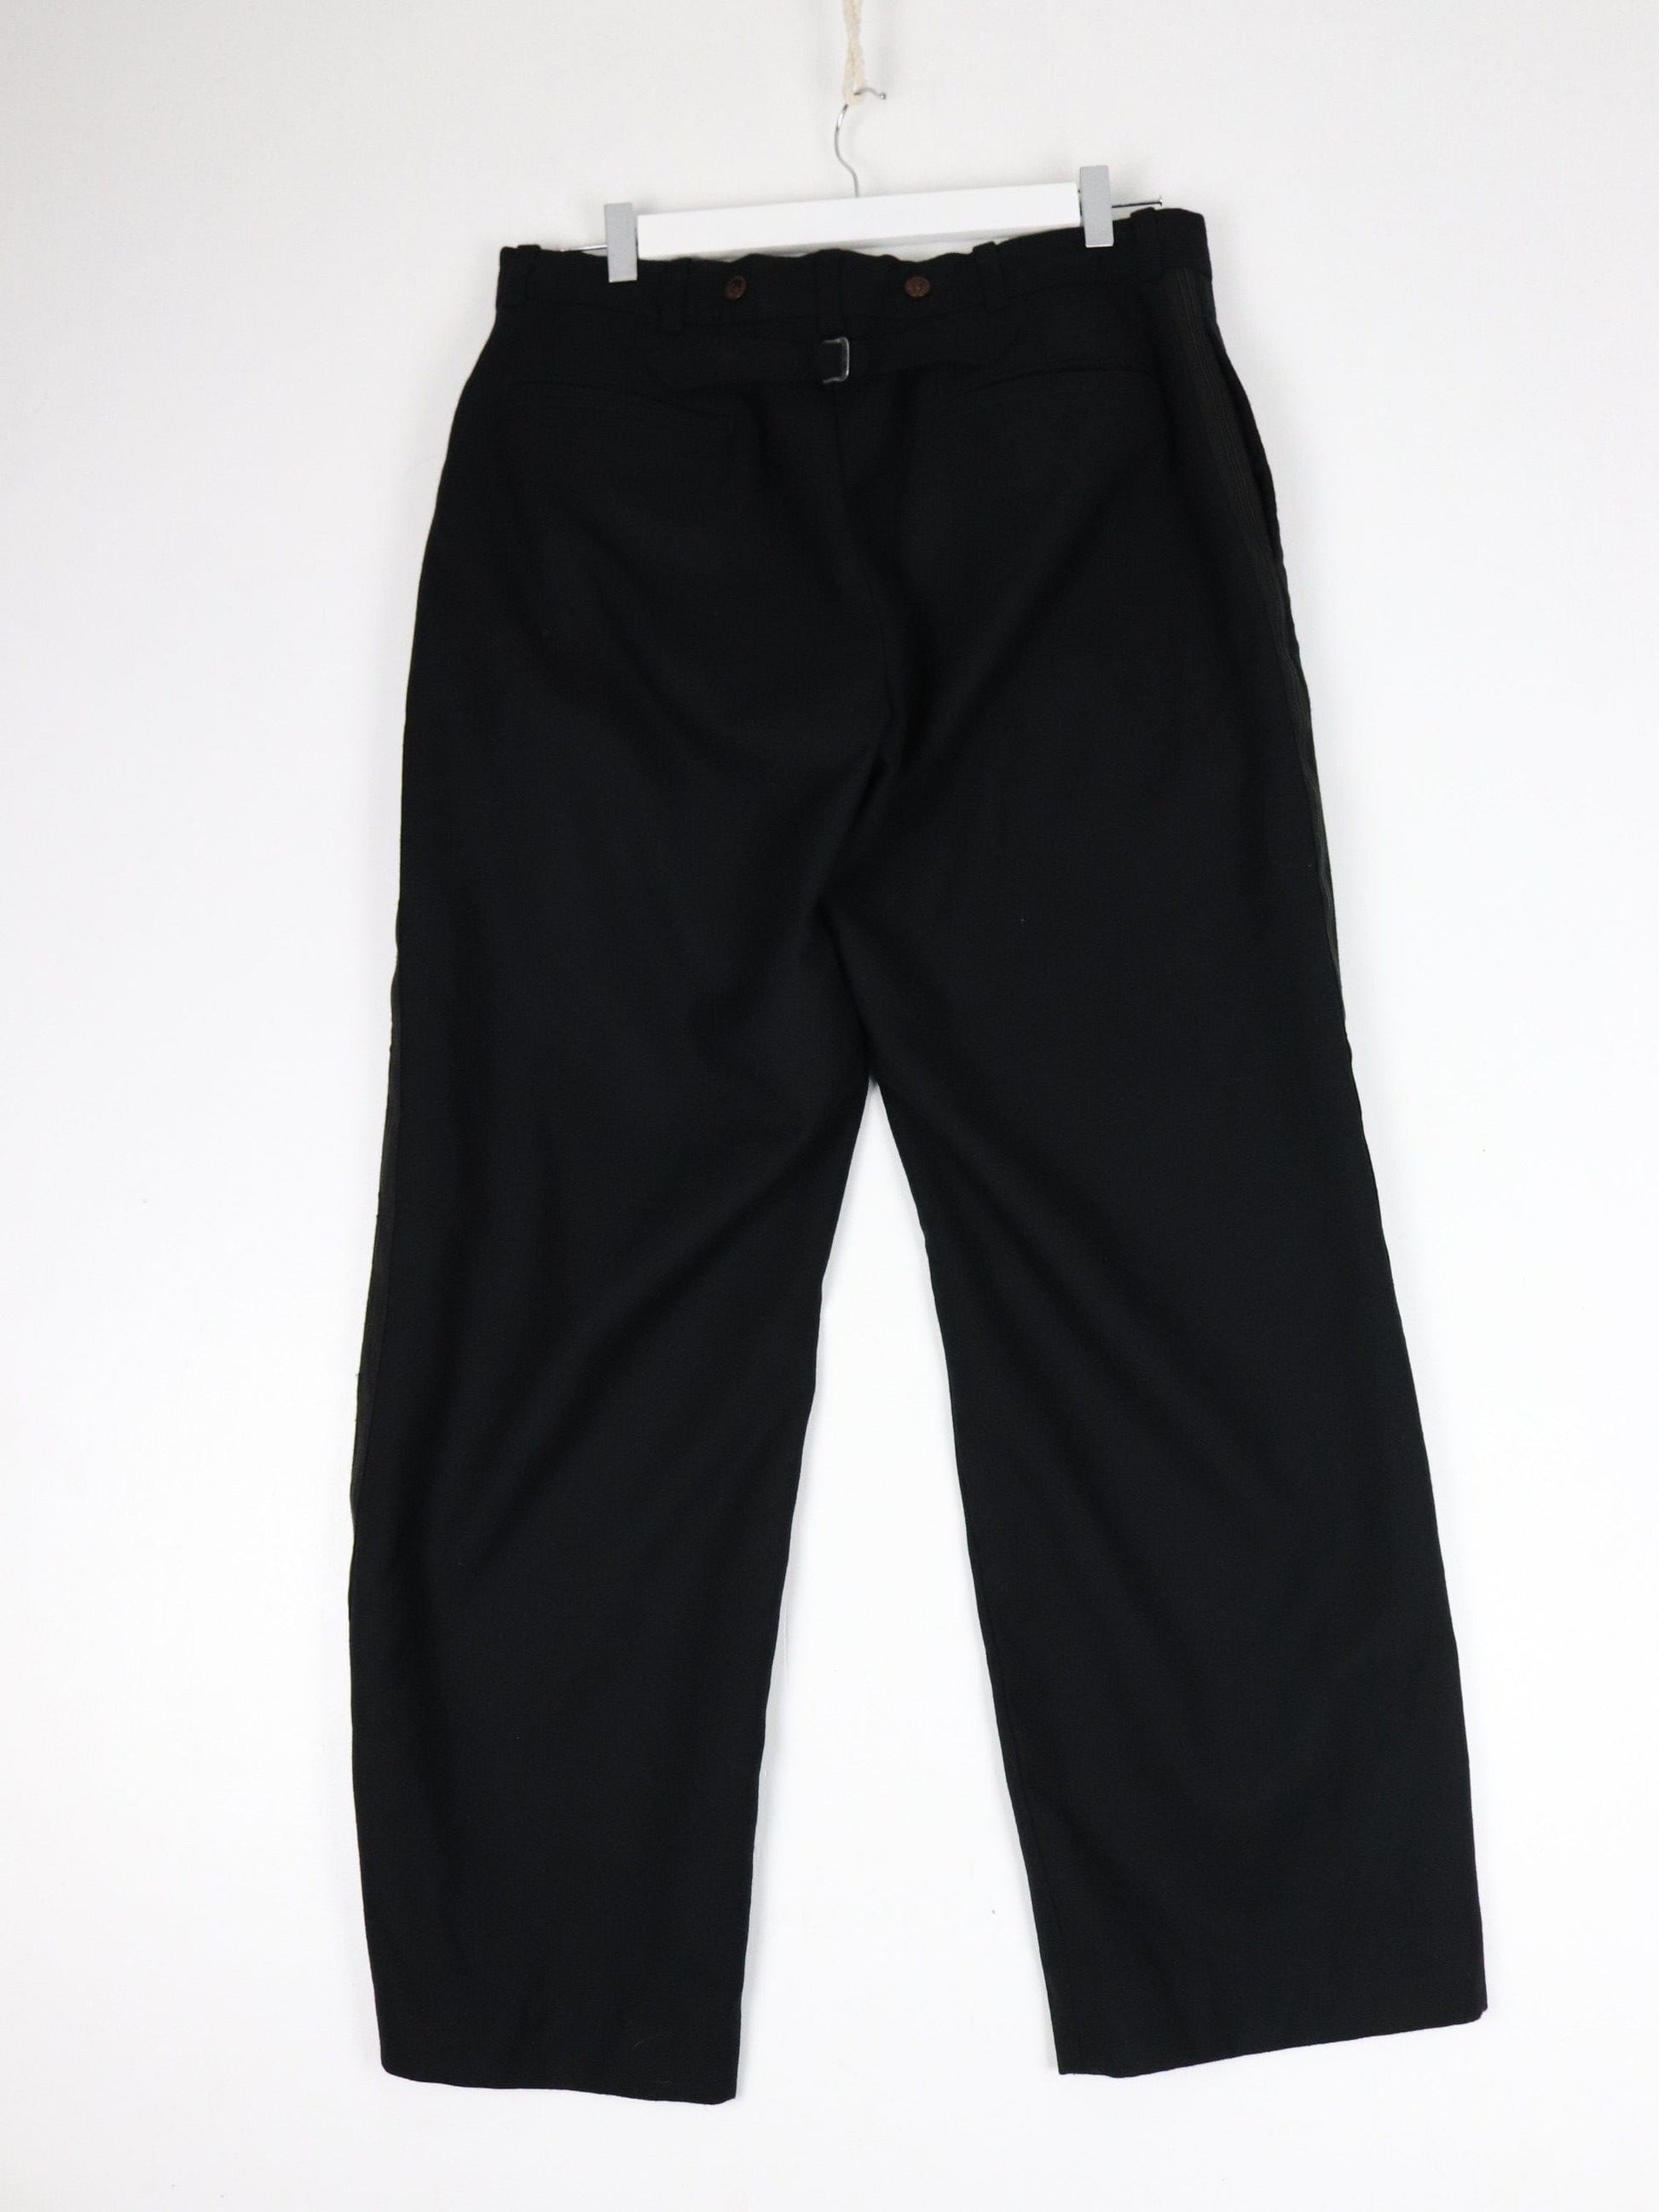 Polo Pants Vintage Polo Ralph Lauren Pants Fits Mens 33 x 29 Black Wool Trousers